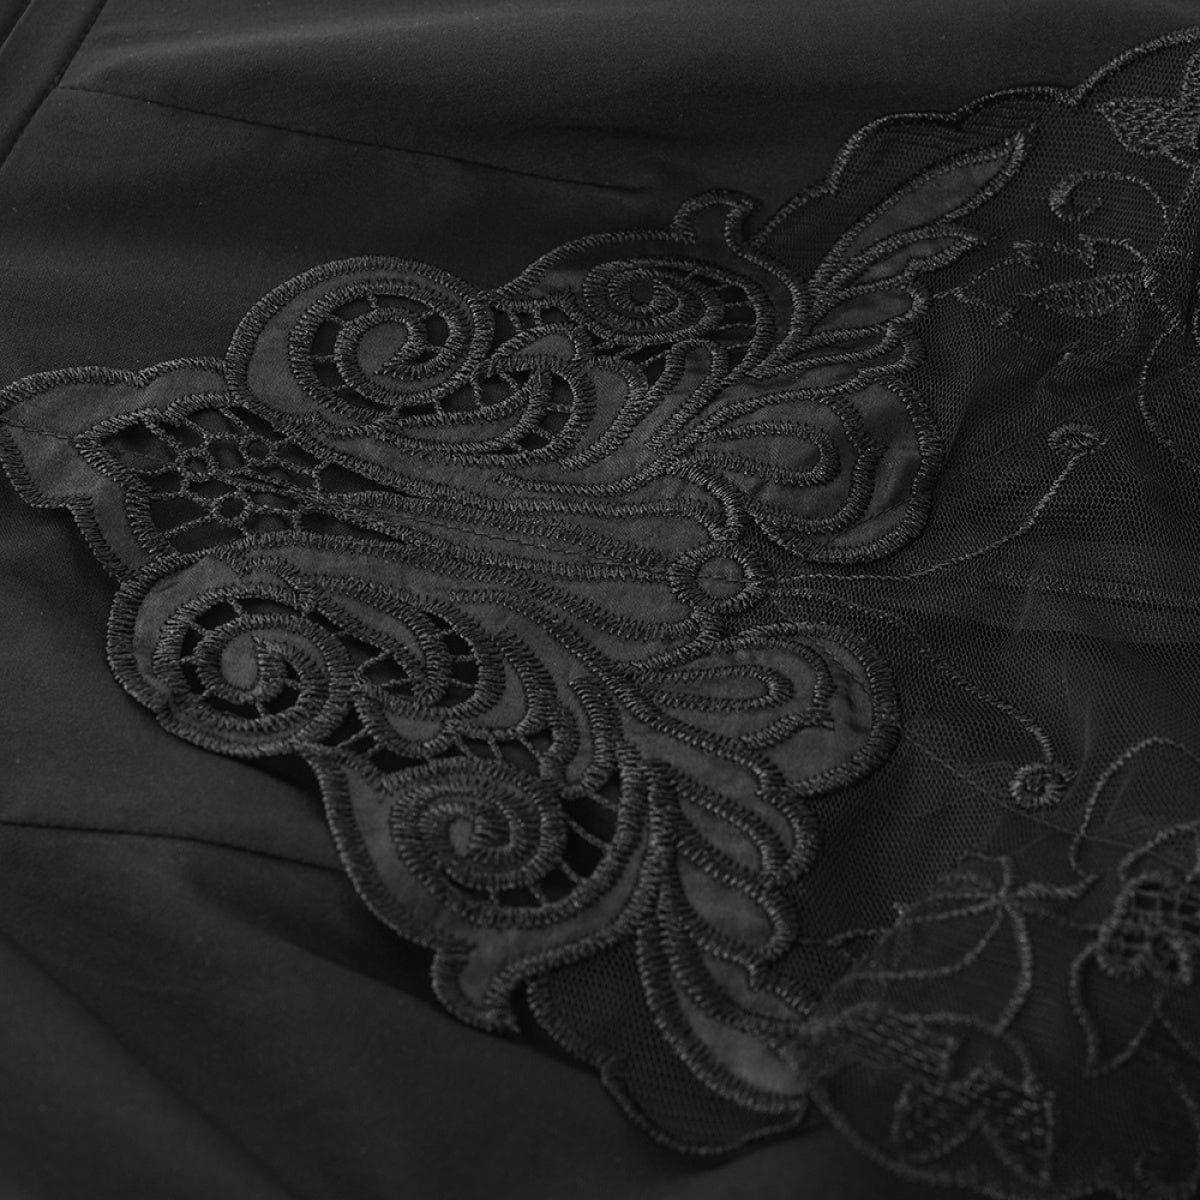 Round Neck Short Sleeve Lace-Embroidered Mini Dress Black